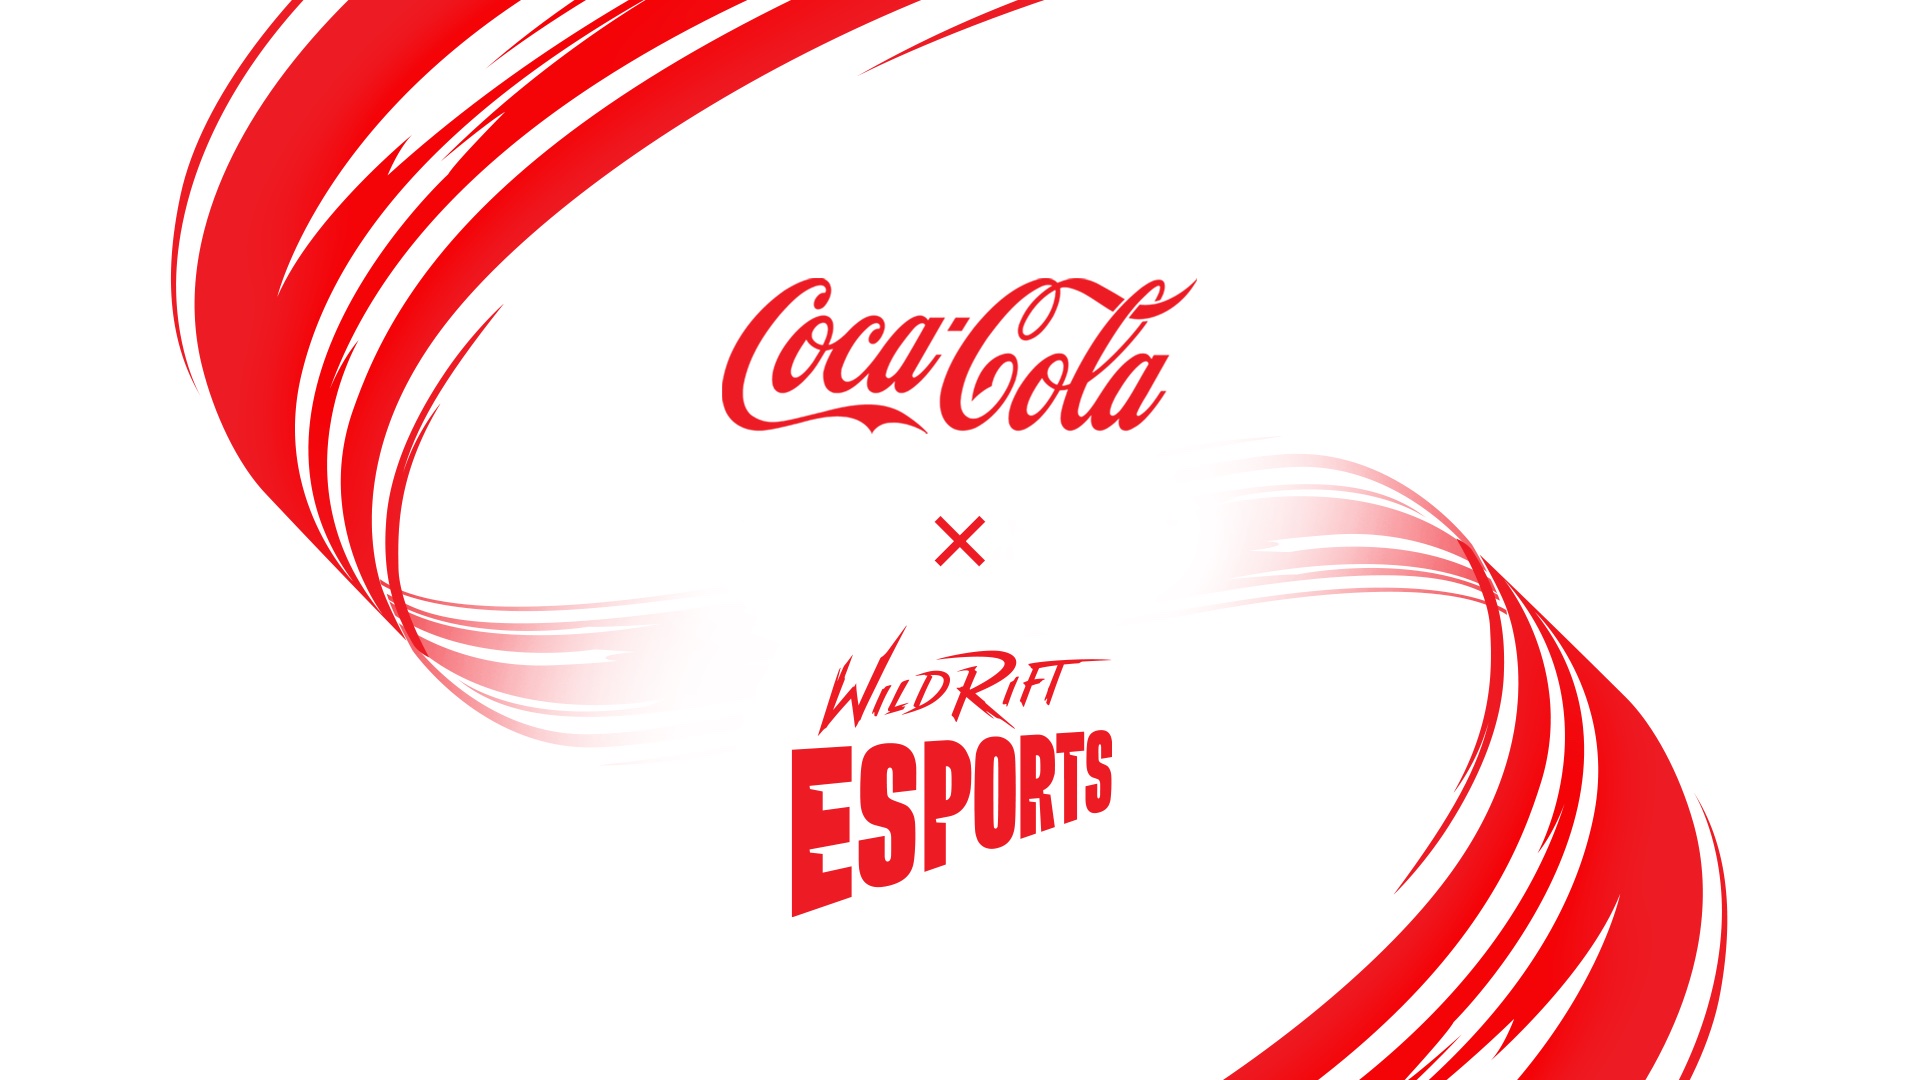 Wild Rift Esports รับ Coca-Cola เข้าเป็นพาทเนอร์